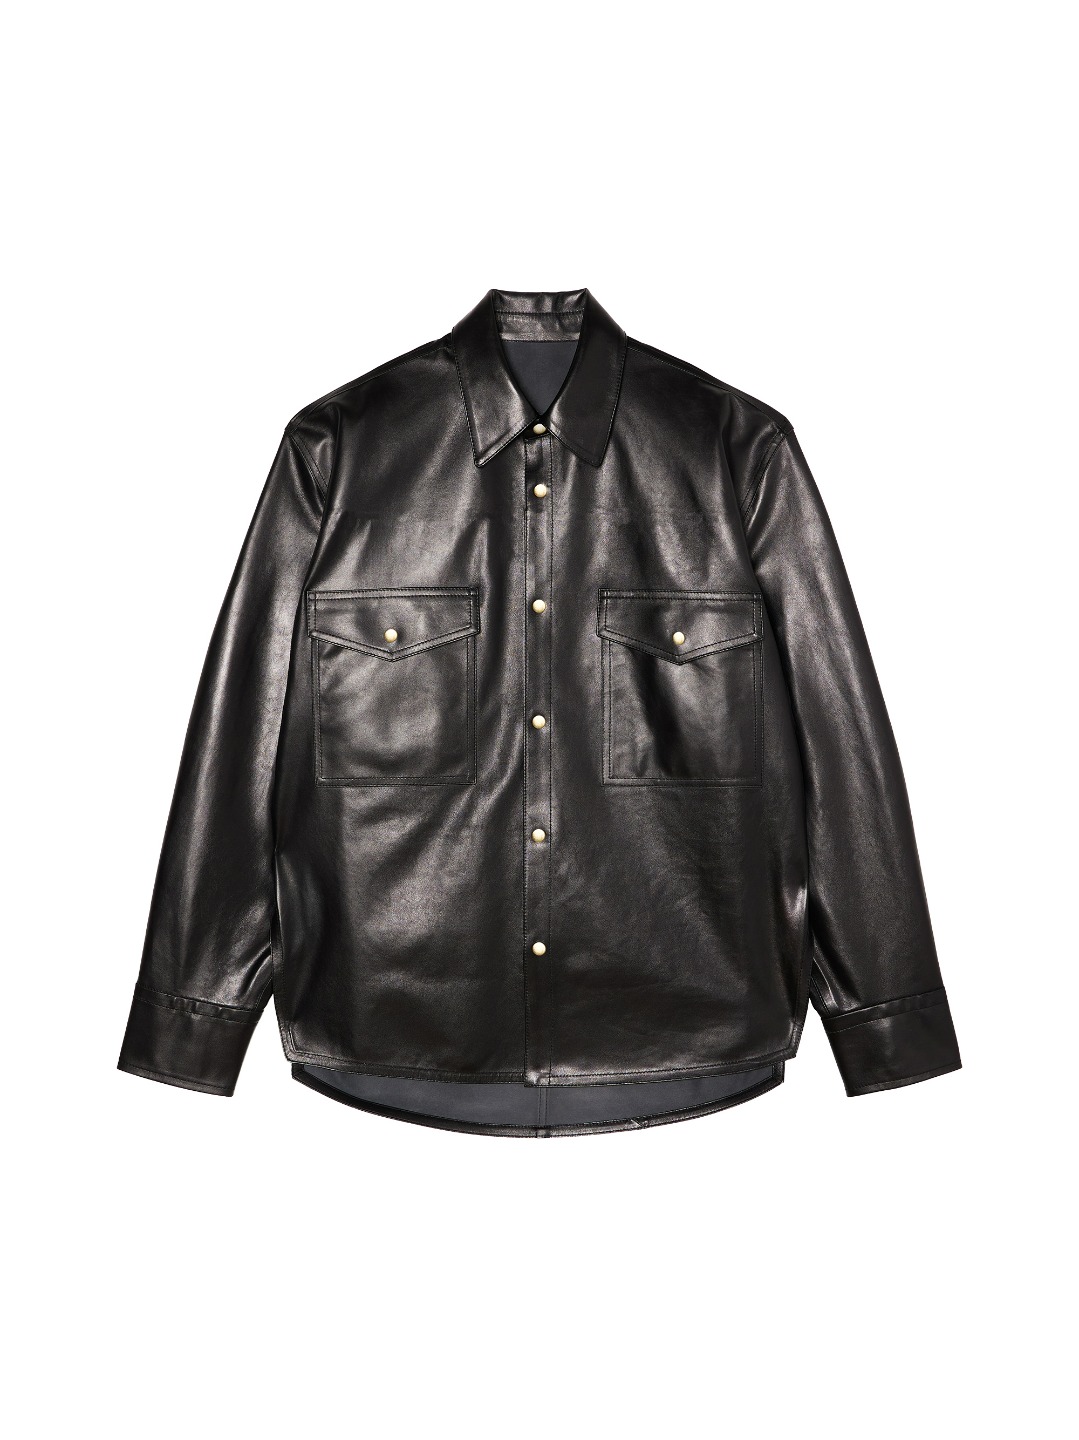 288. Button-down Lamb Leather Shirt Jacket / 버튼-다운 램 레더 셔츠 자켓